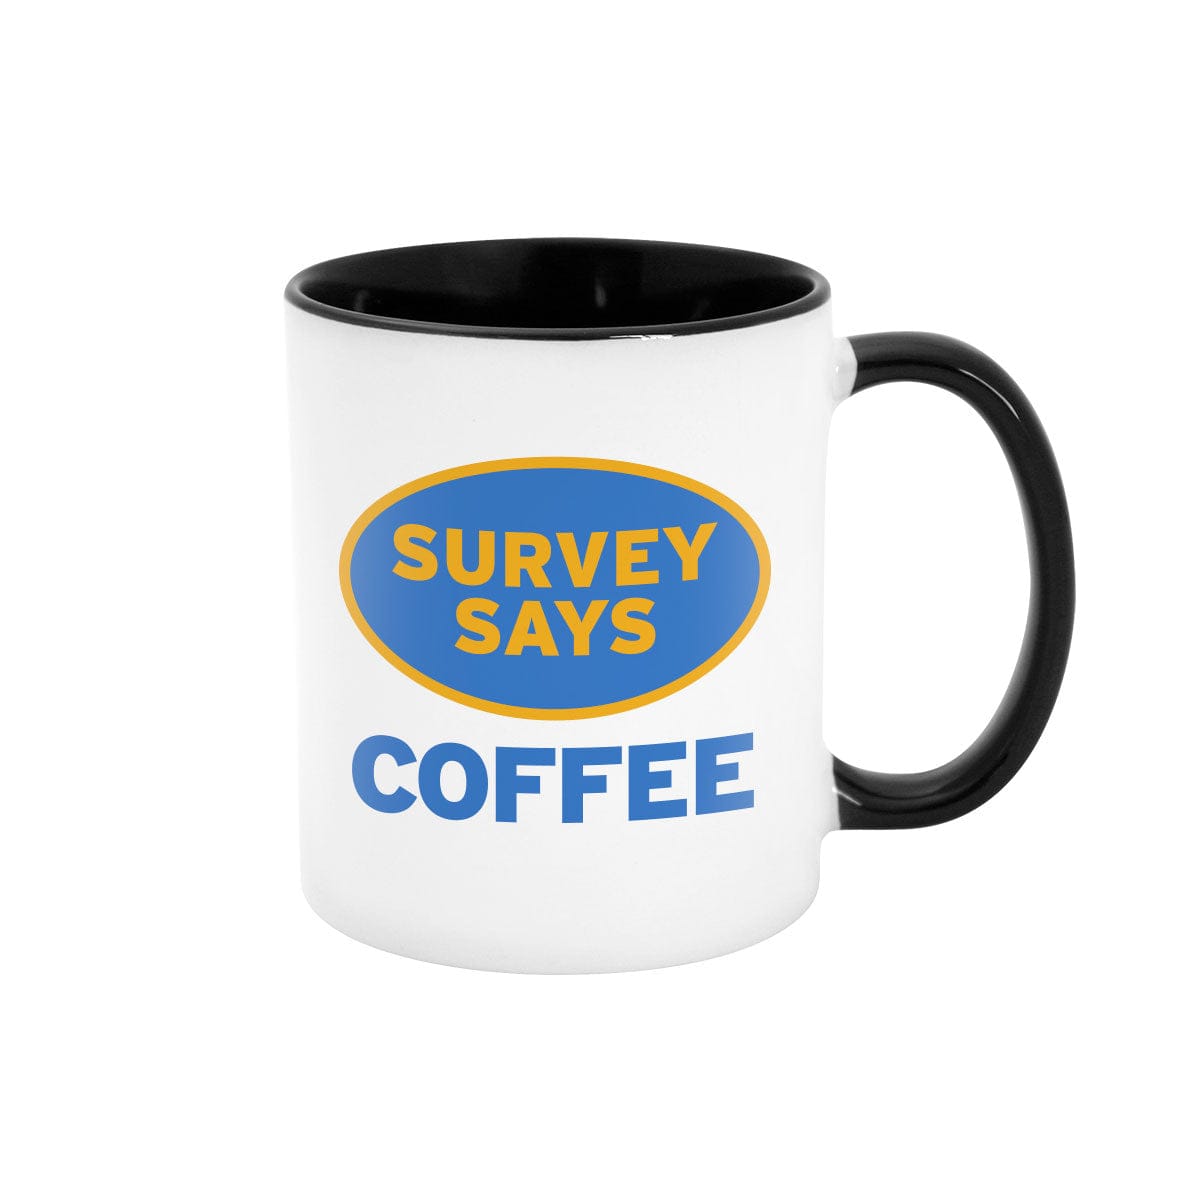 Survey Says Coffee 11oz Mug with Black Accents